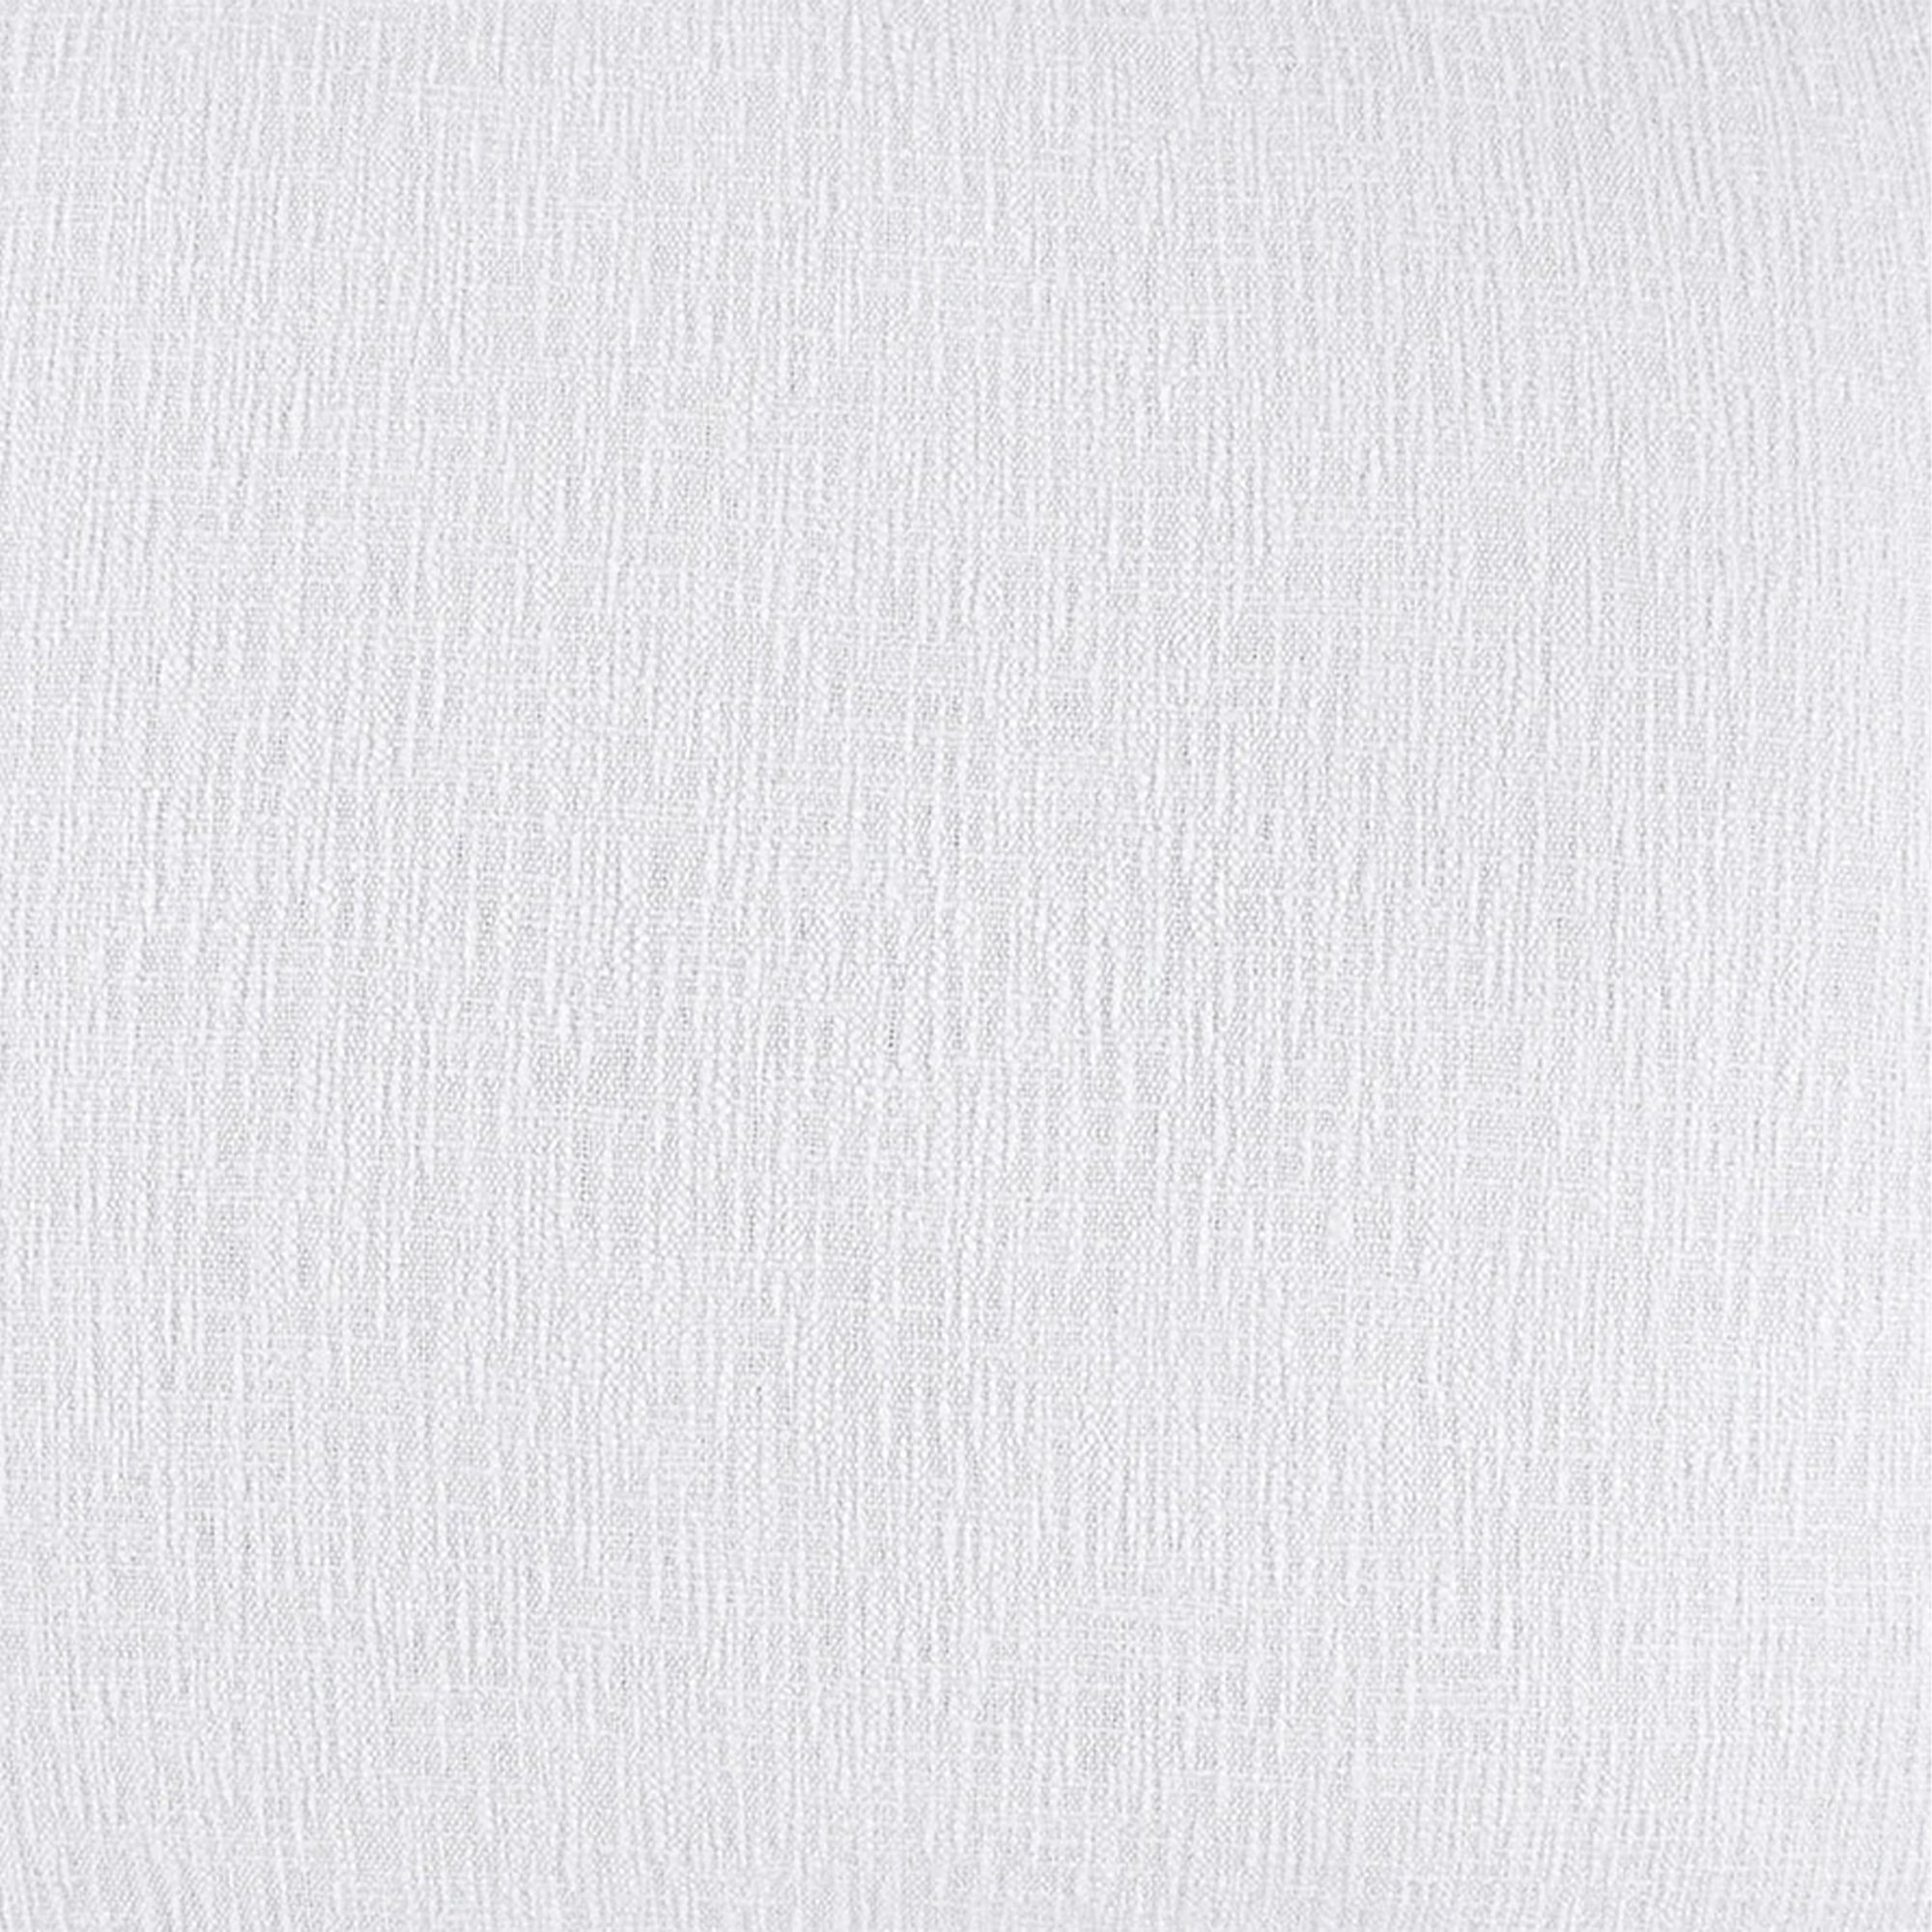 White Woven Pillow Cover